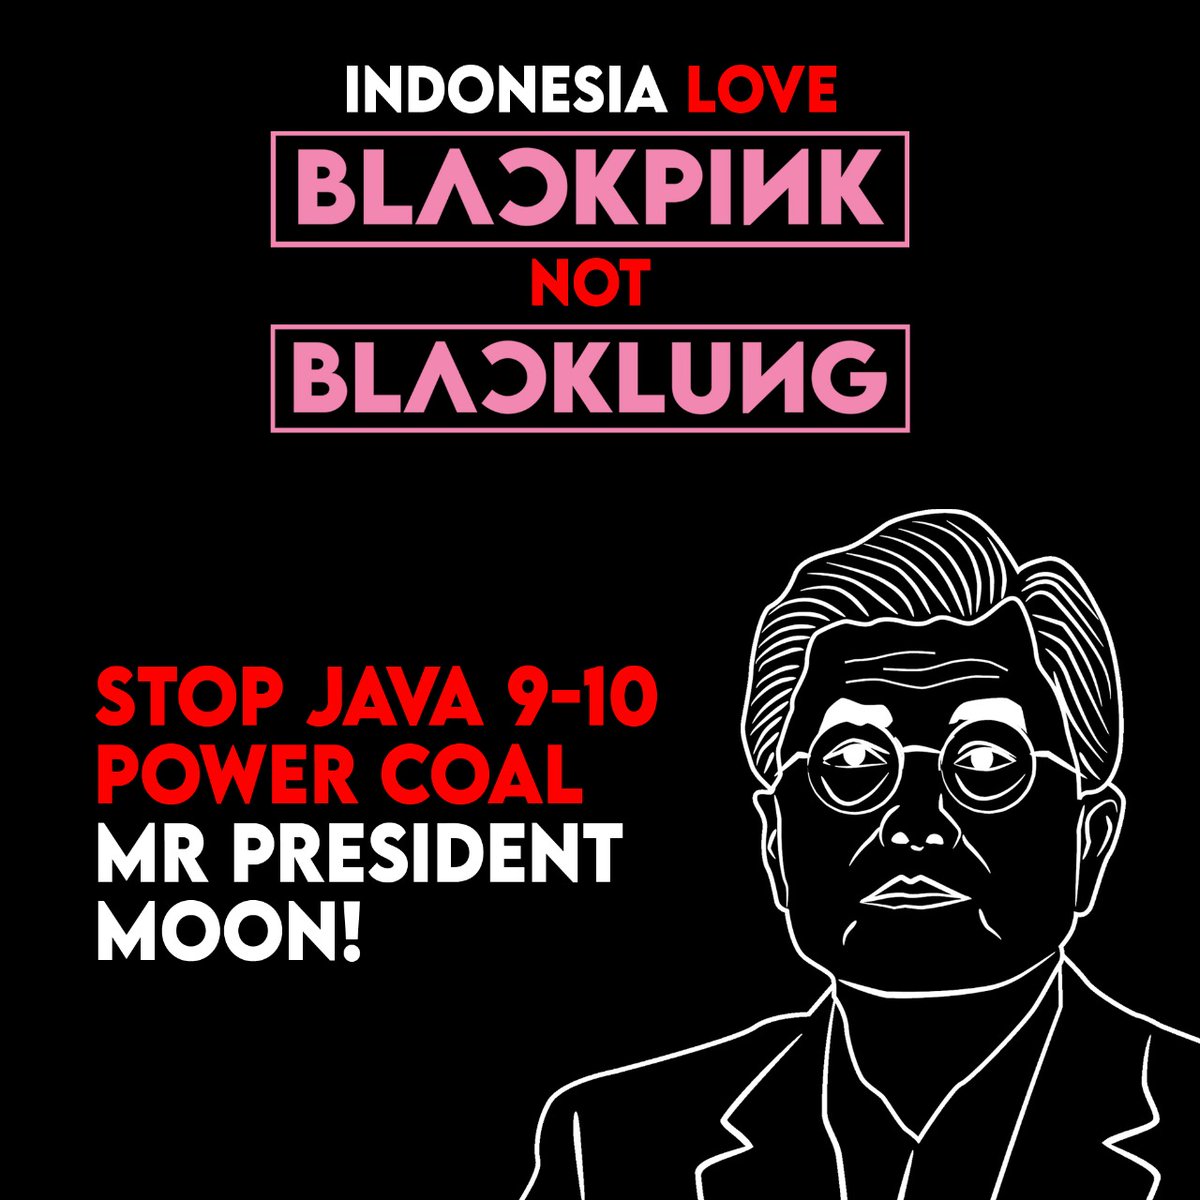 BLACKPINK YES, BLACK LUNG  NOOOOO. 

#BantenPollutionStory
#TransformingEnergy
#CleanIndonesia